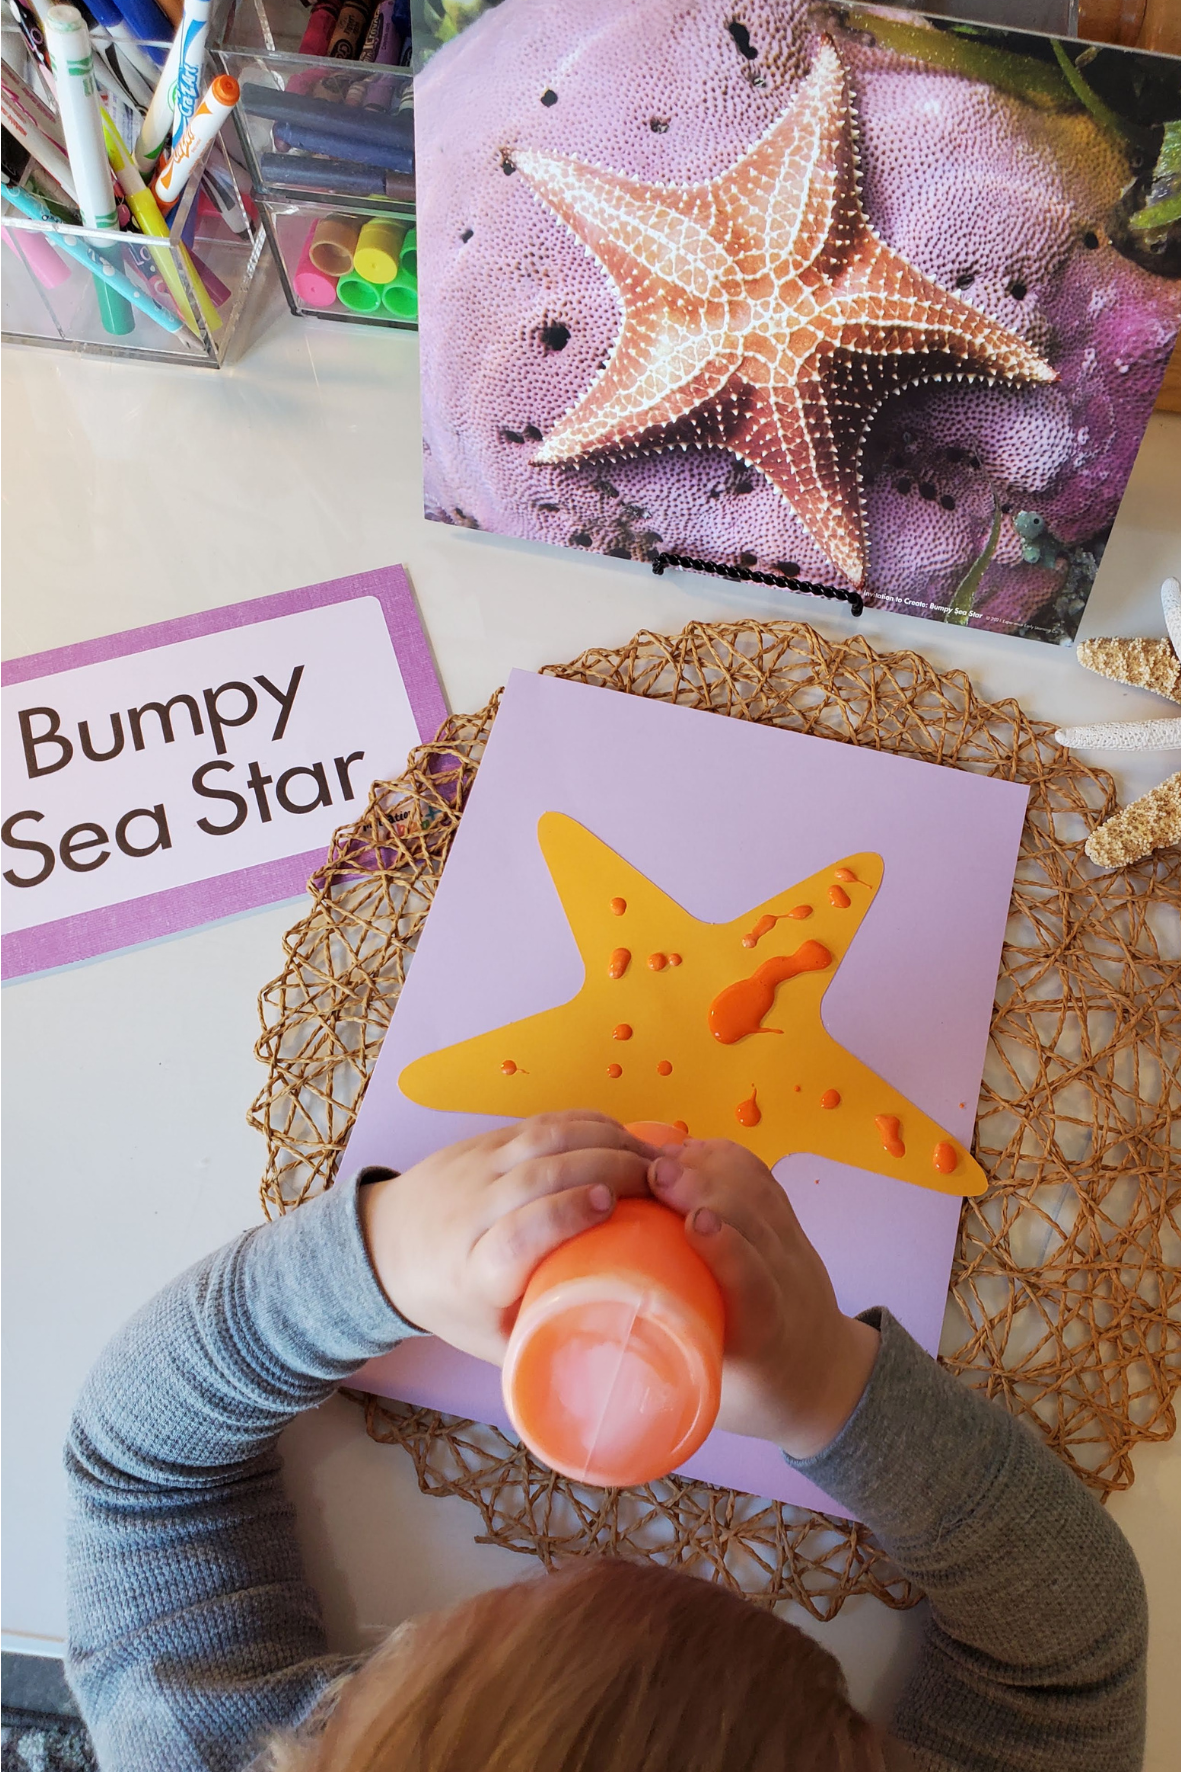 Bumpy Sea Star art from Experience Preschool Ocean Dive theme